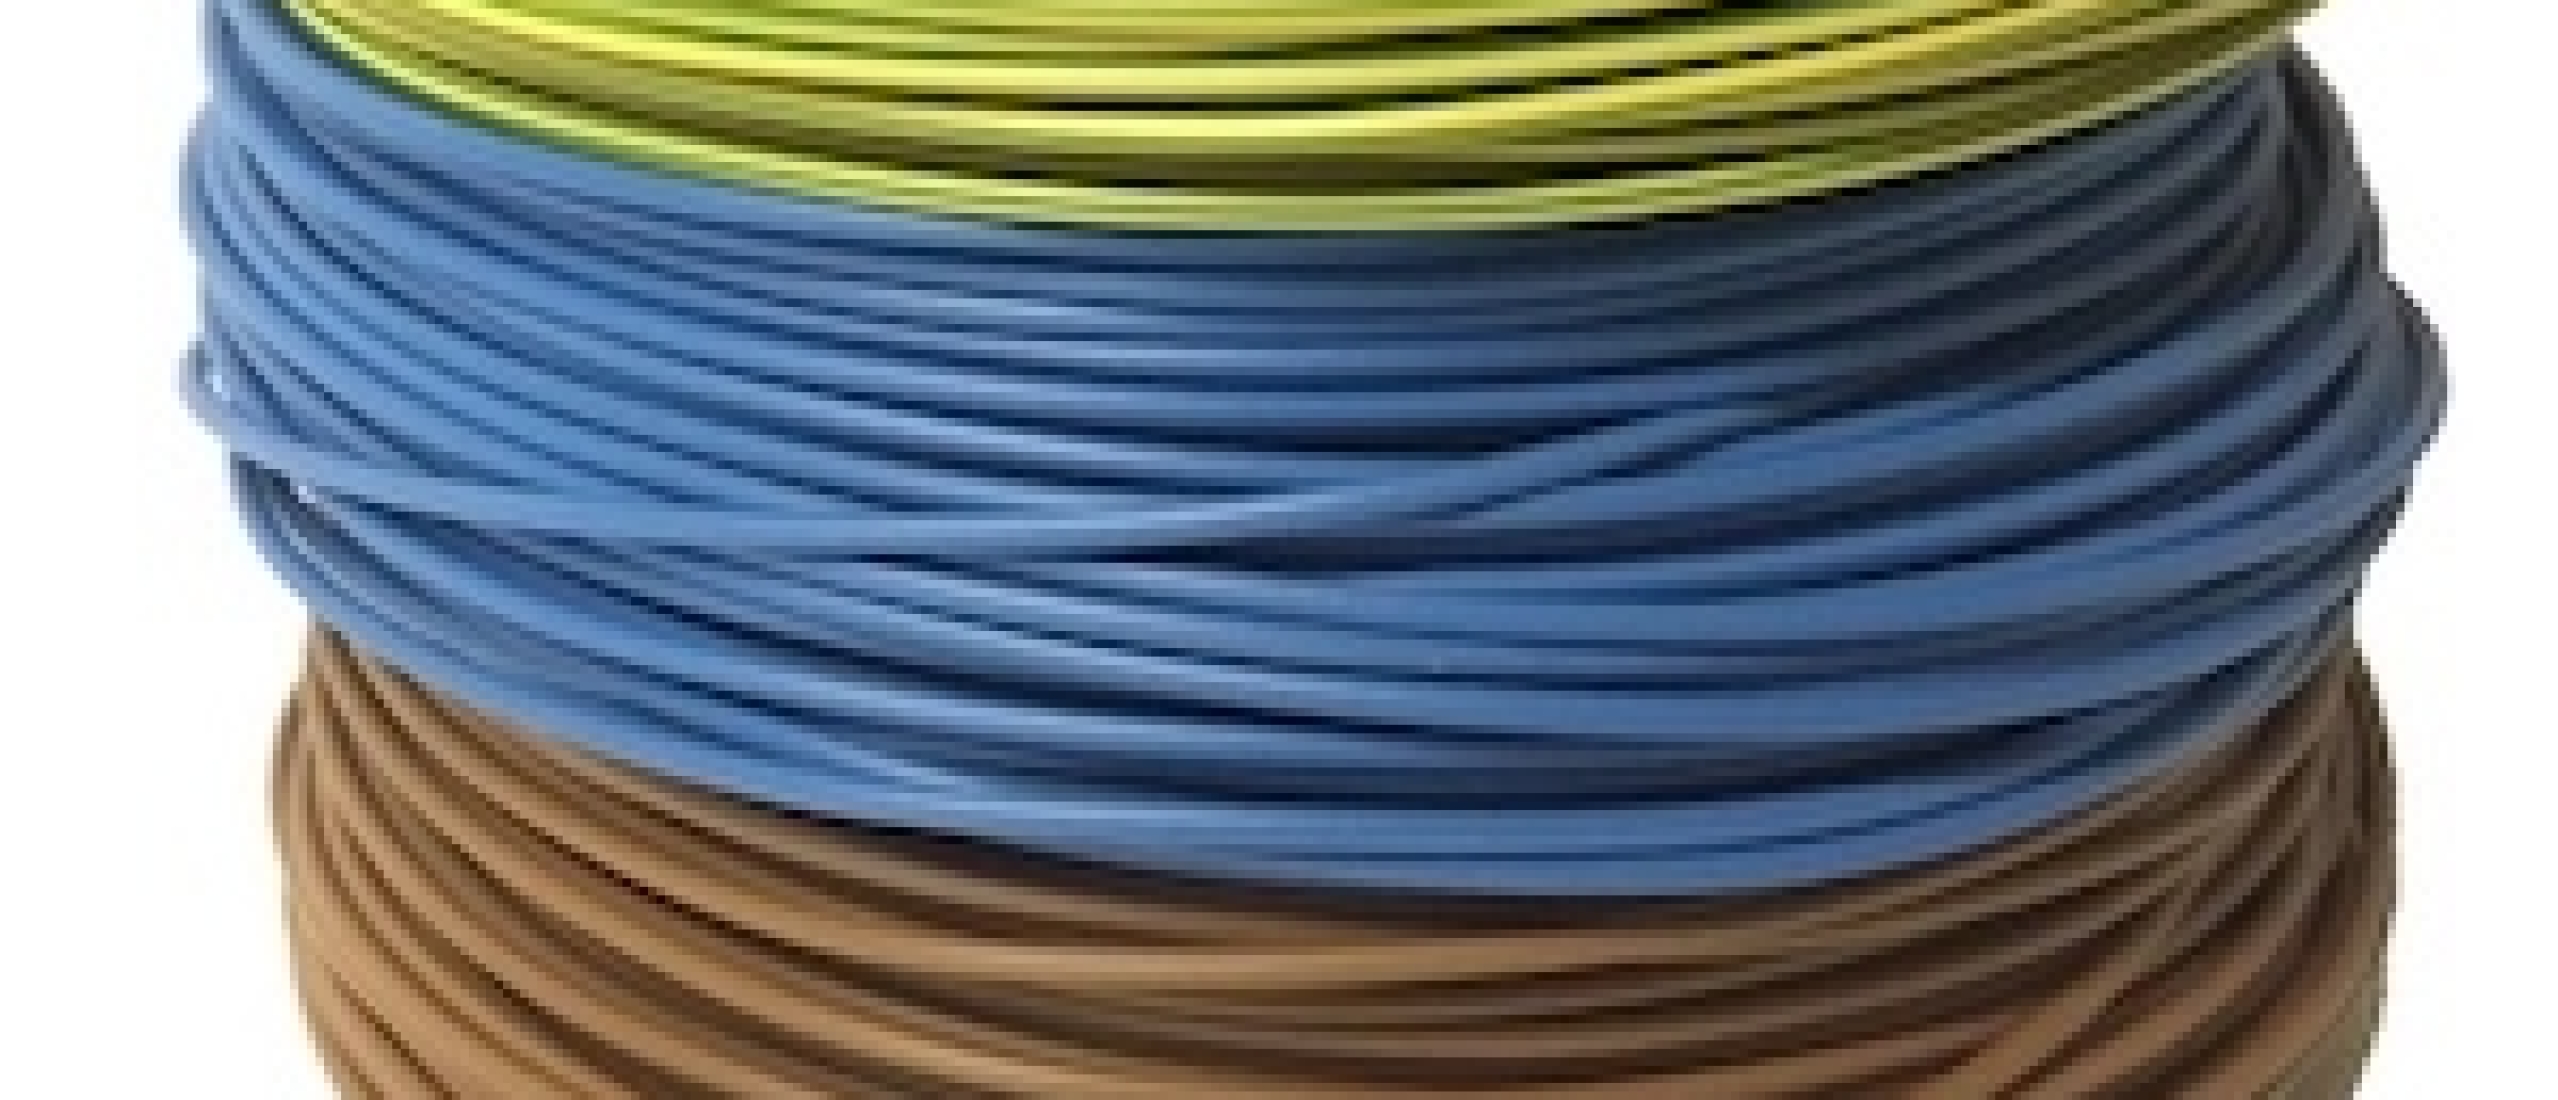 2.5mm2 installatie kabel trekken fornuisgroep